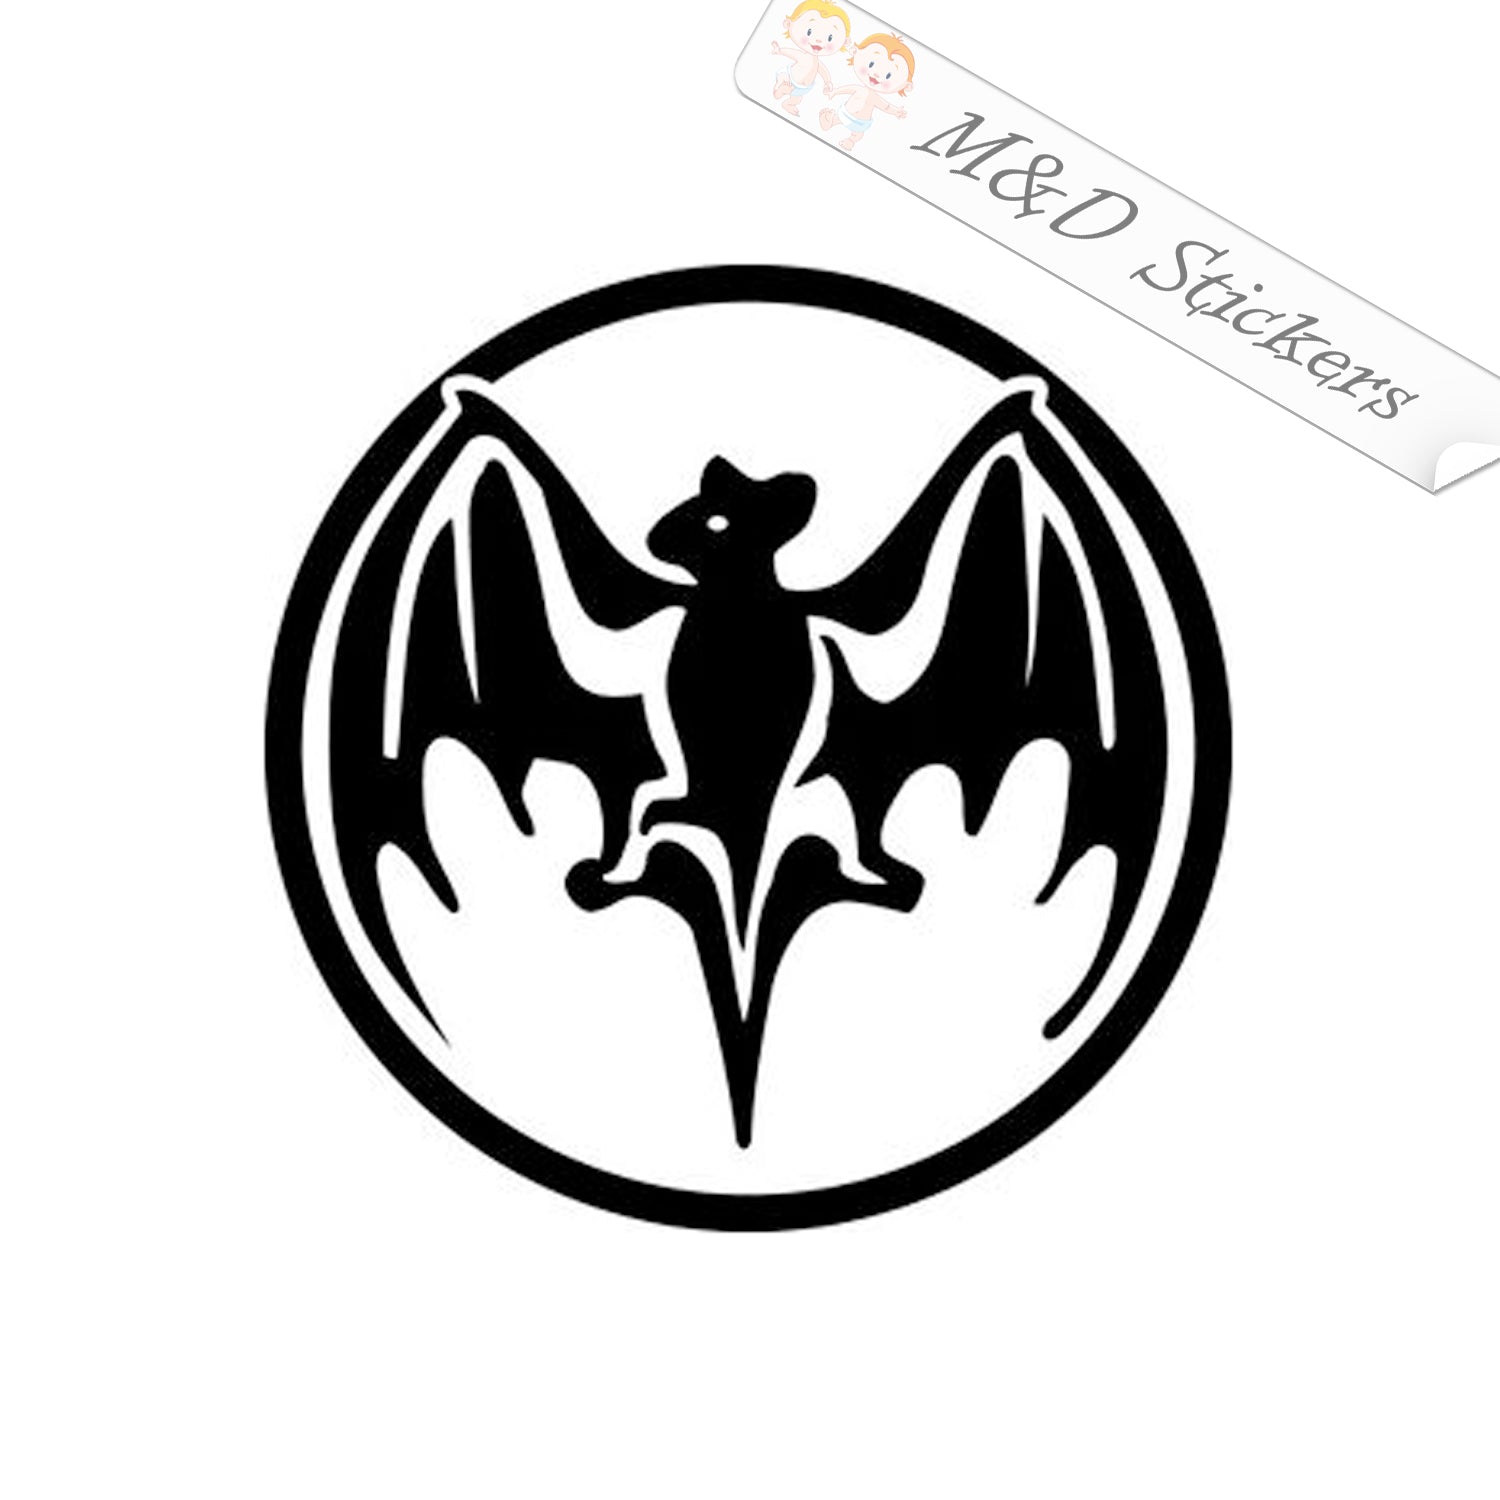 Download Bacardi Bat Logo - Bacardi Martini Ltd PNG Image with No  Background - PNGkey.com